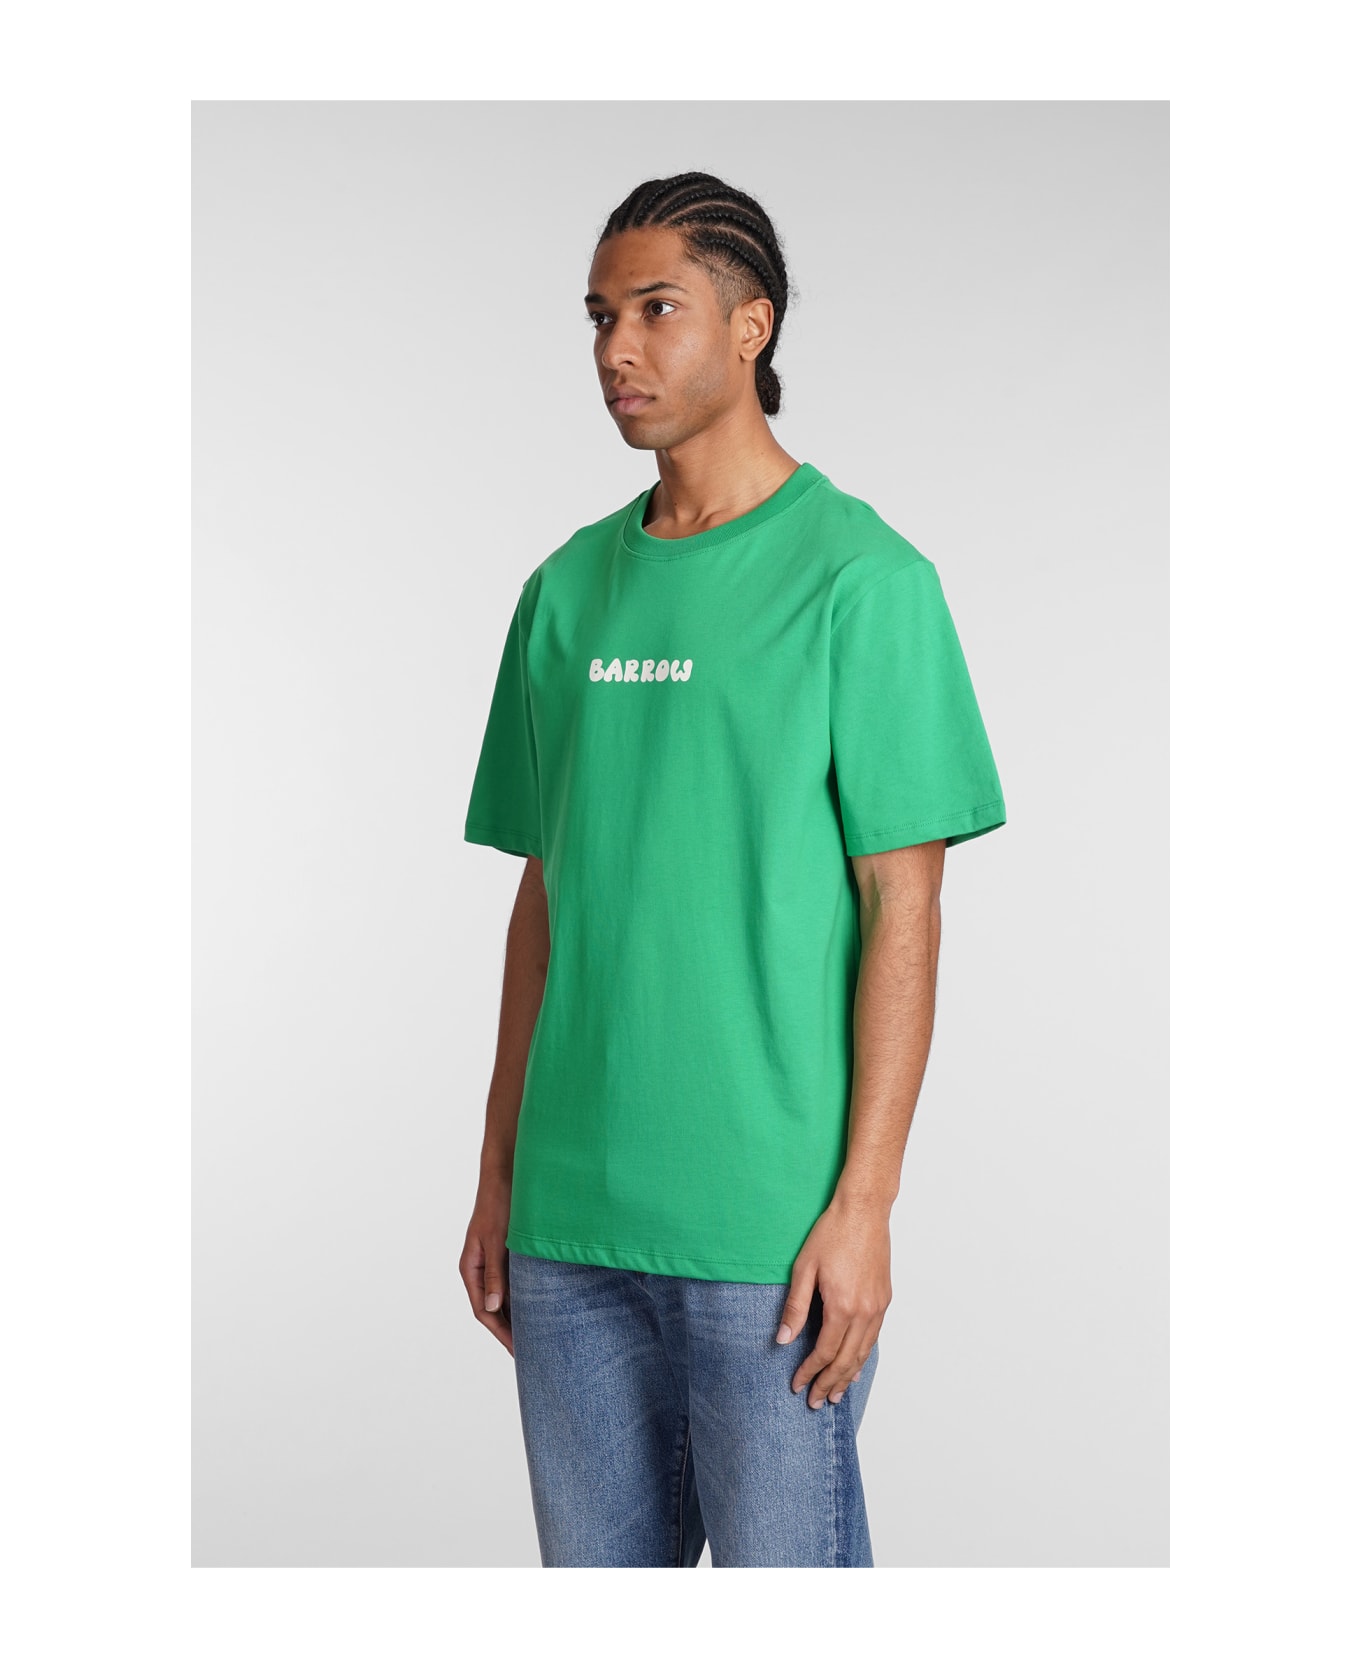 Barrow T-shirt In Green Cotton - green